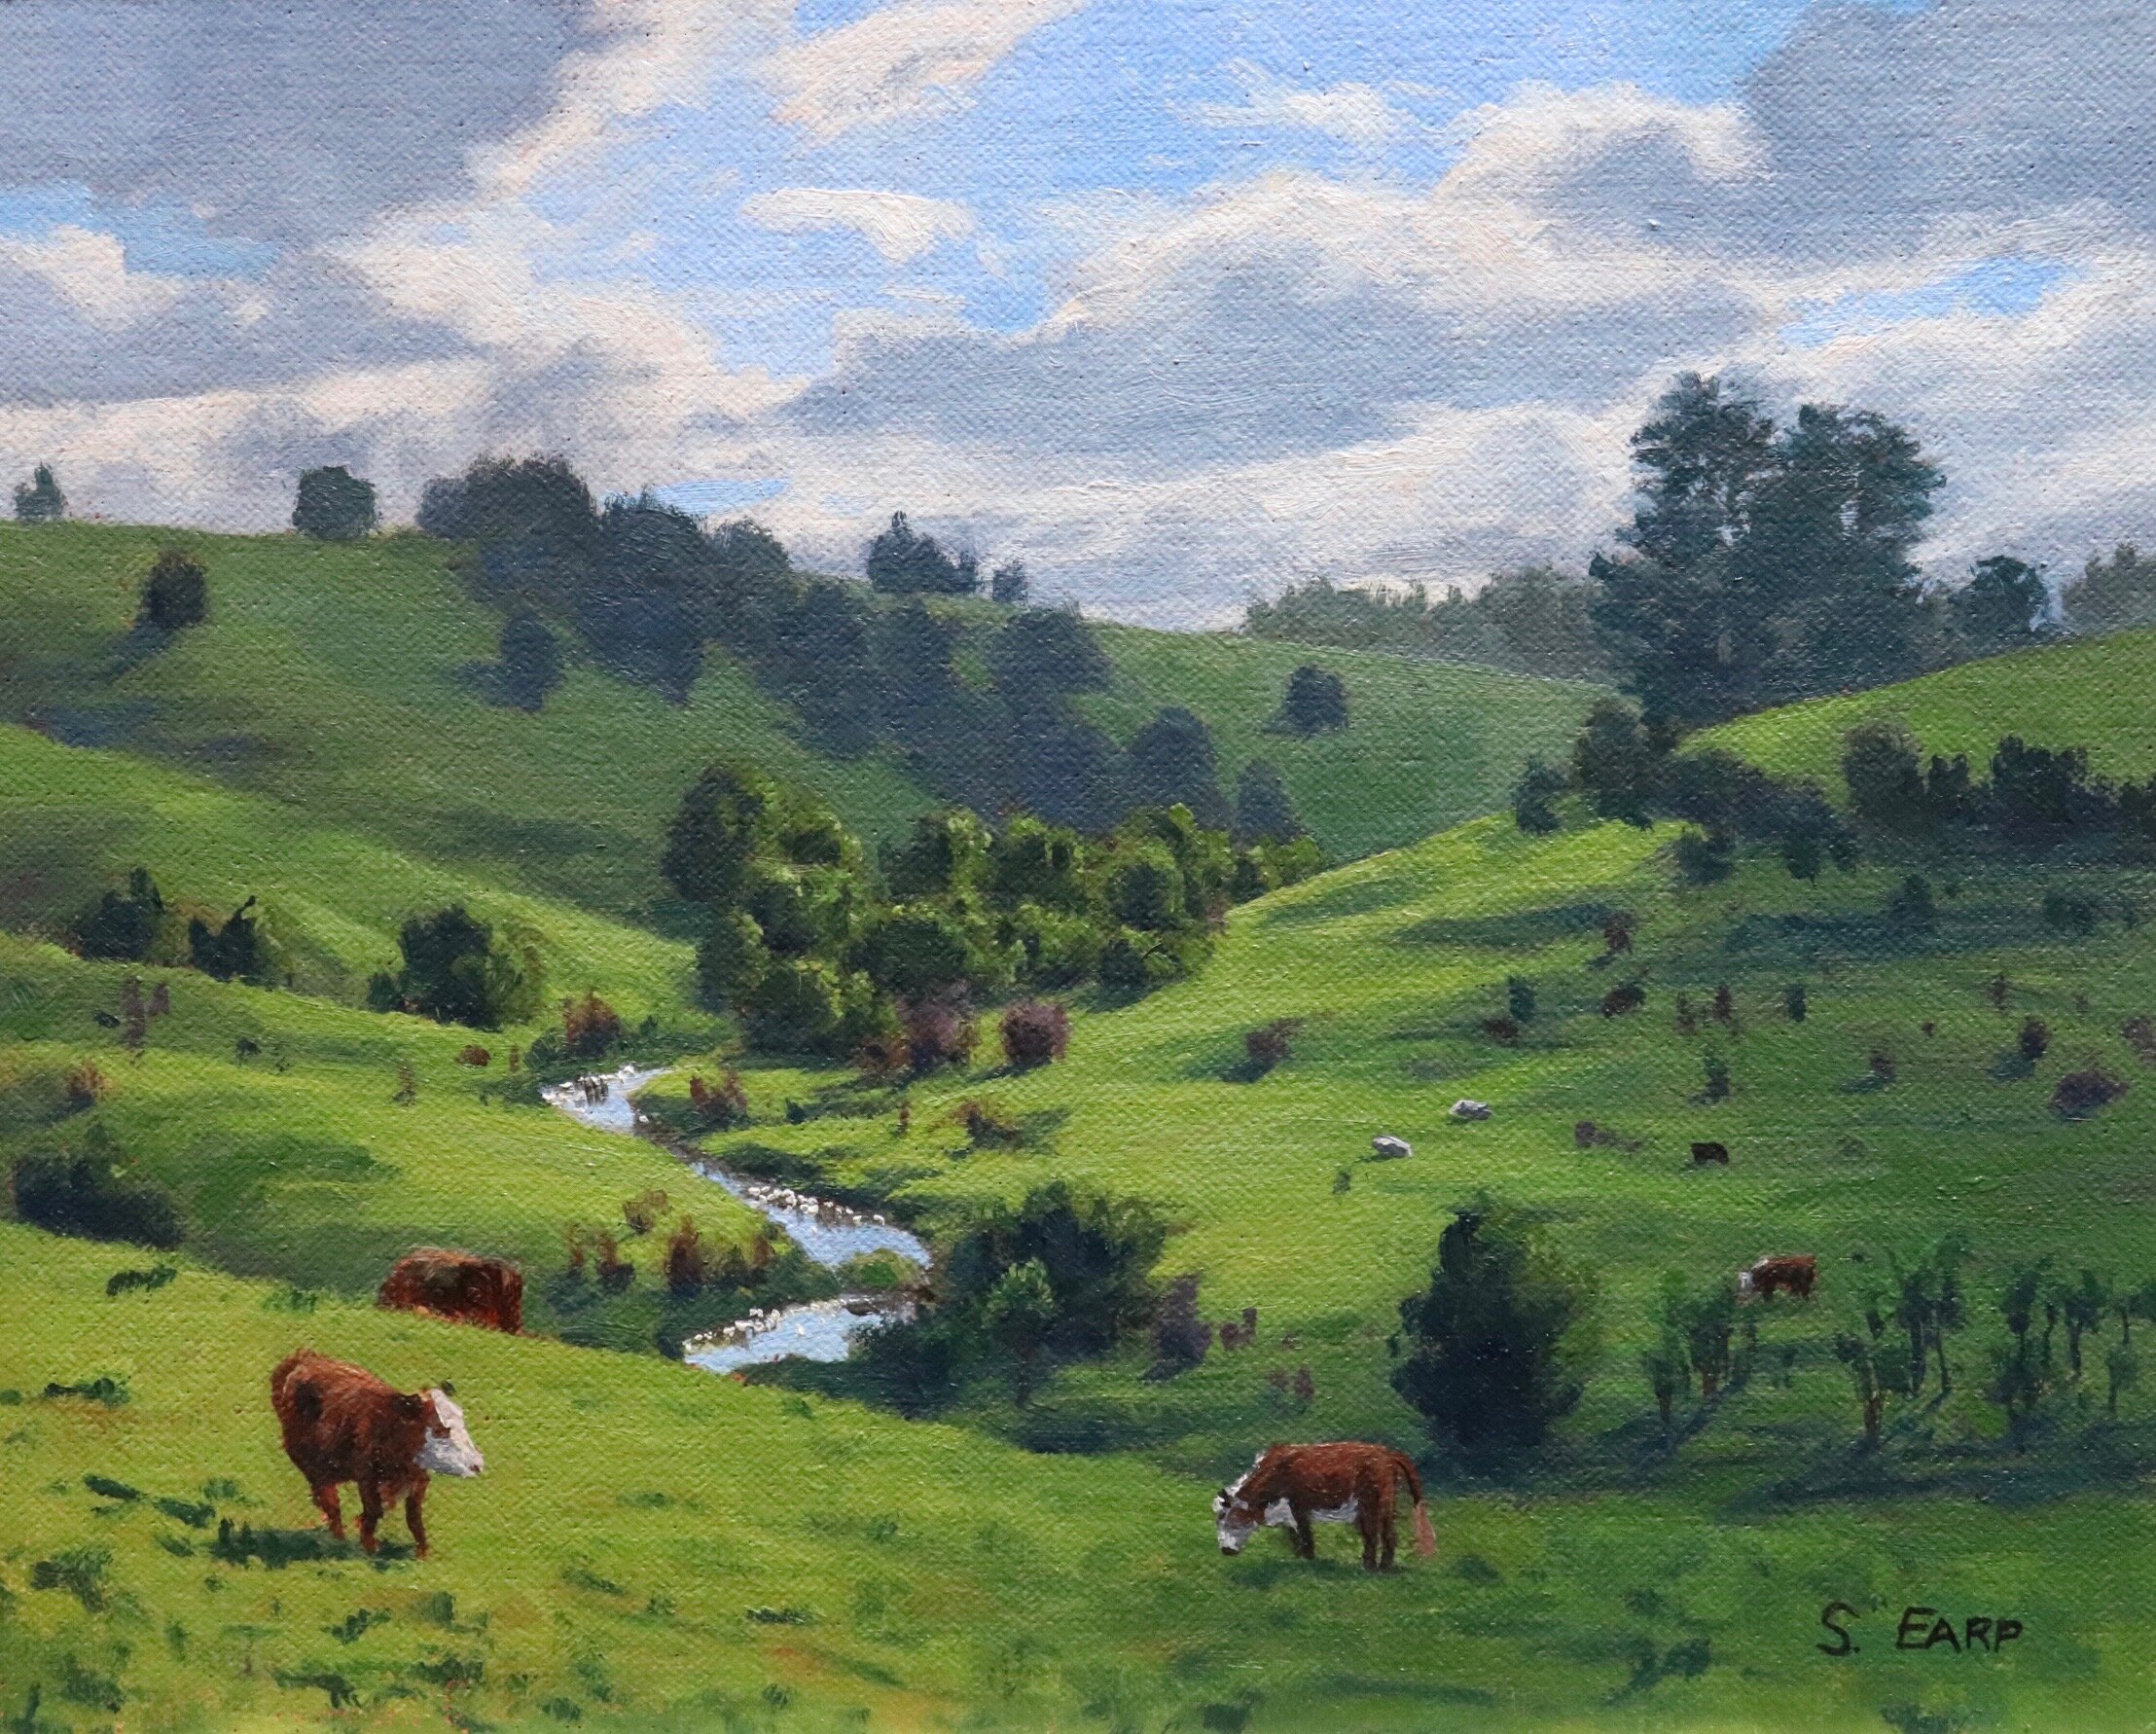 Hidden Valley - Samuel Earp - oil painting copy.jpeg